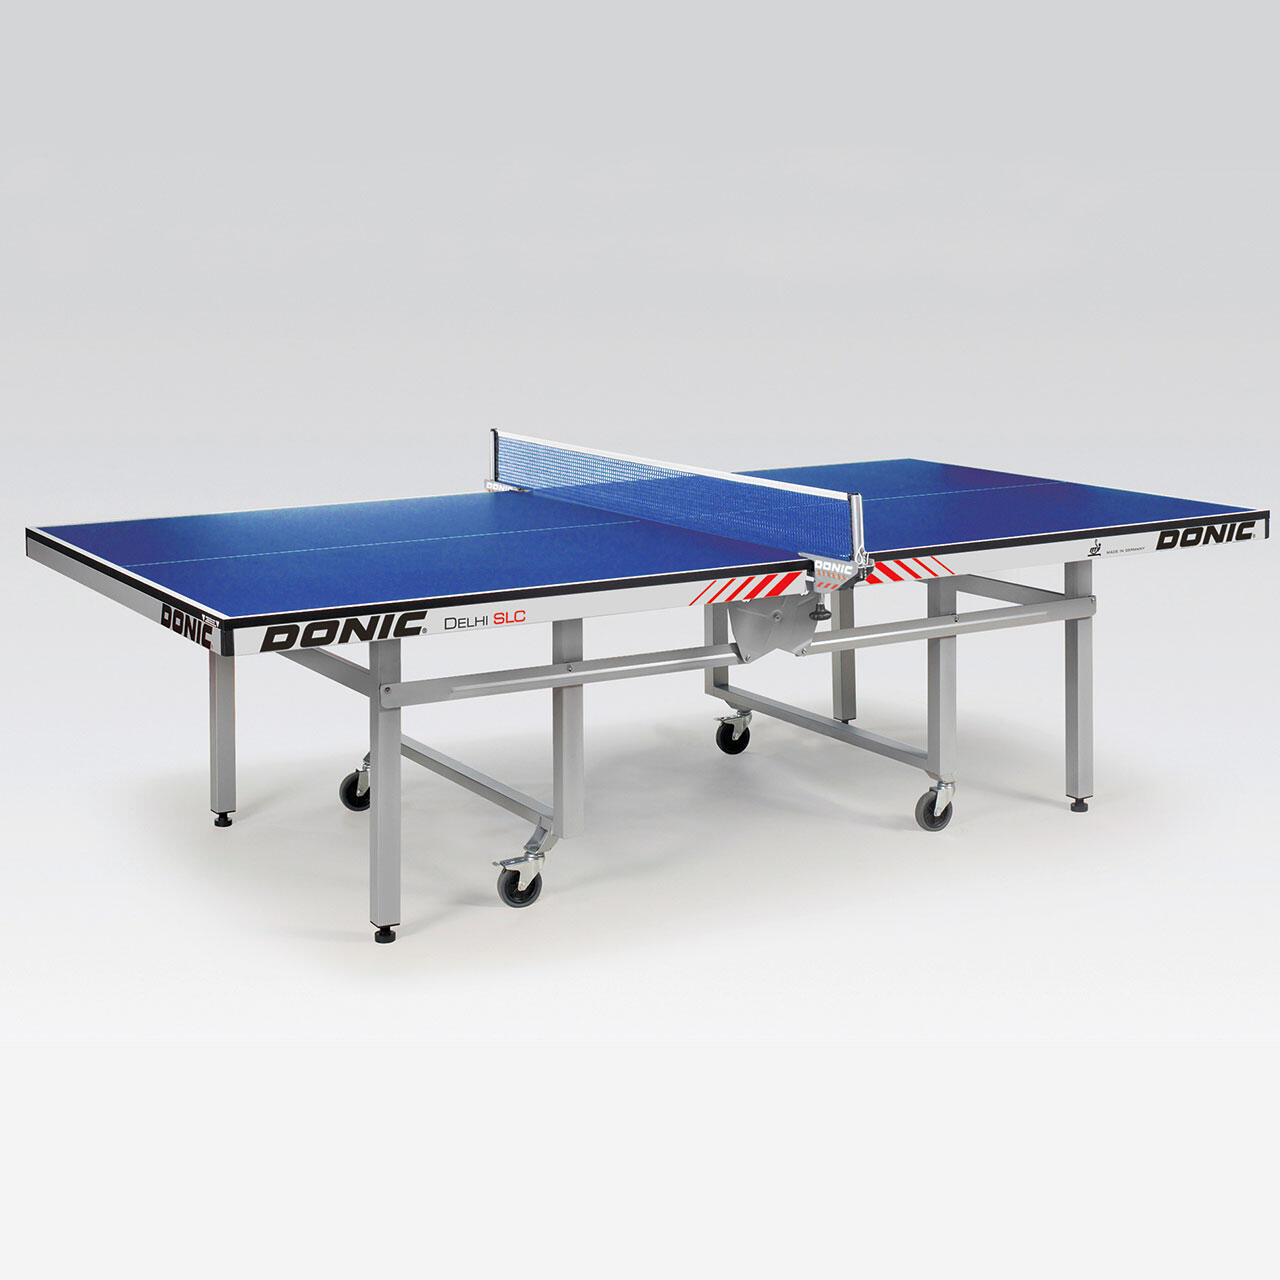 Donic Delhi SLC Blue Table Tennis Table 1/3